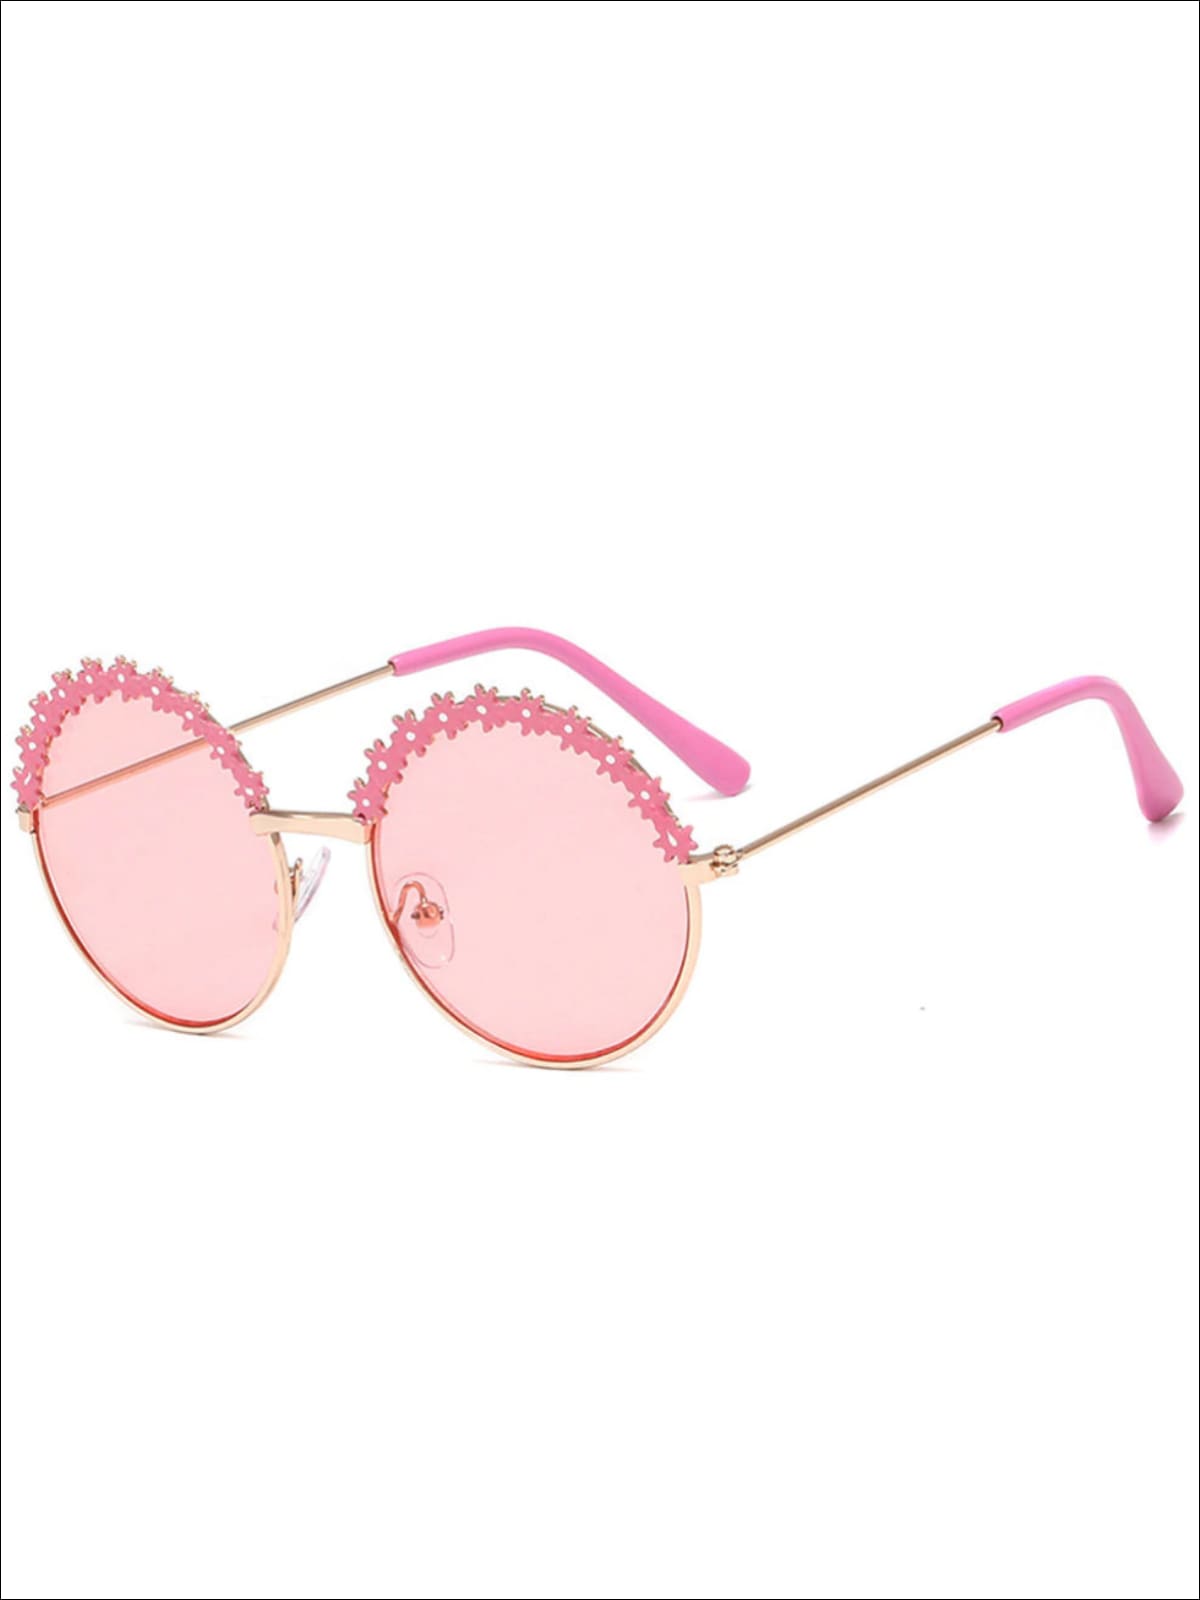 Girls Round Vintage Floral Sunglasses - Pink - Girls Accessories